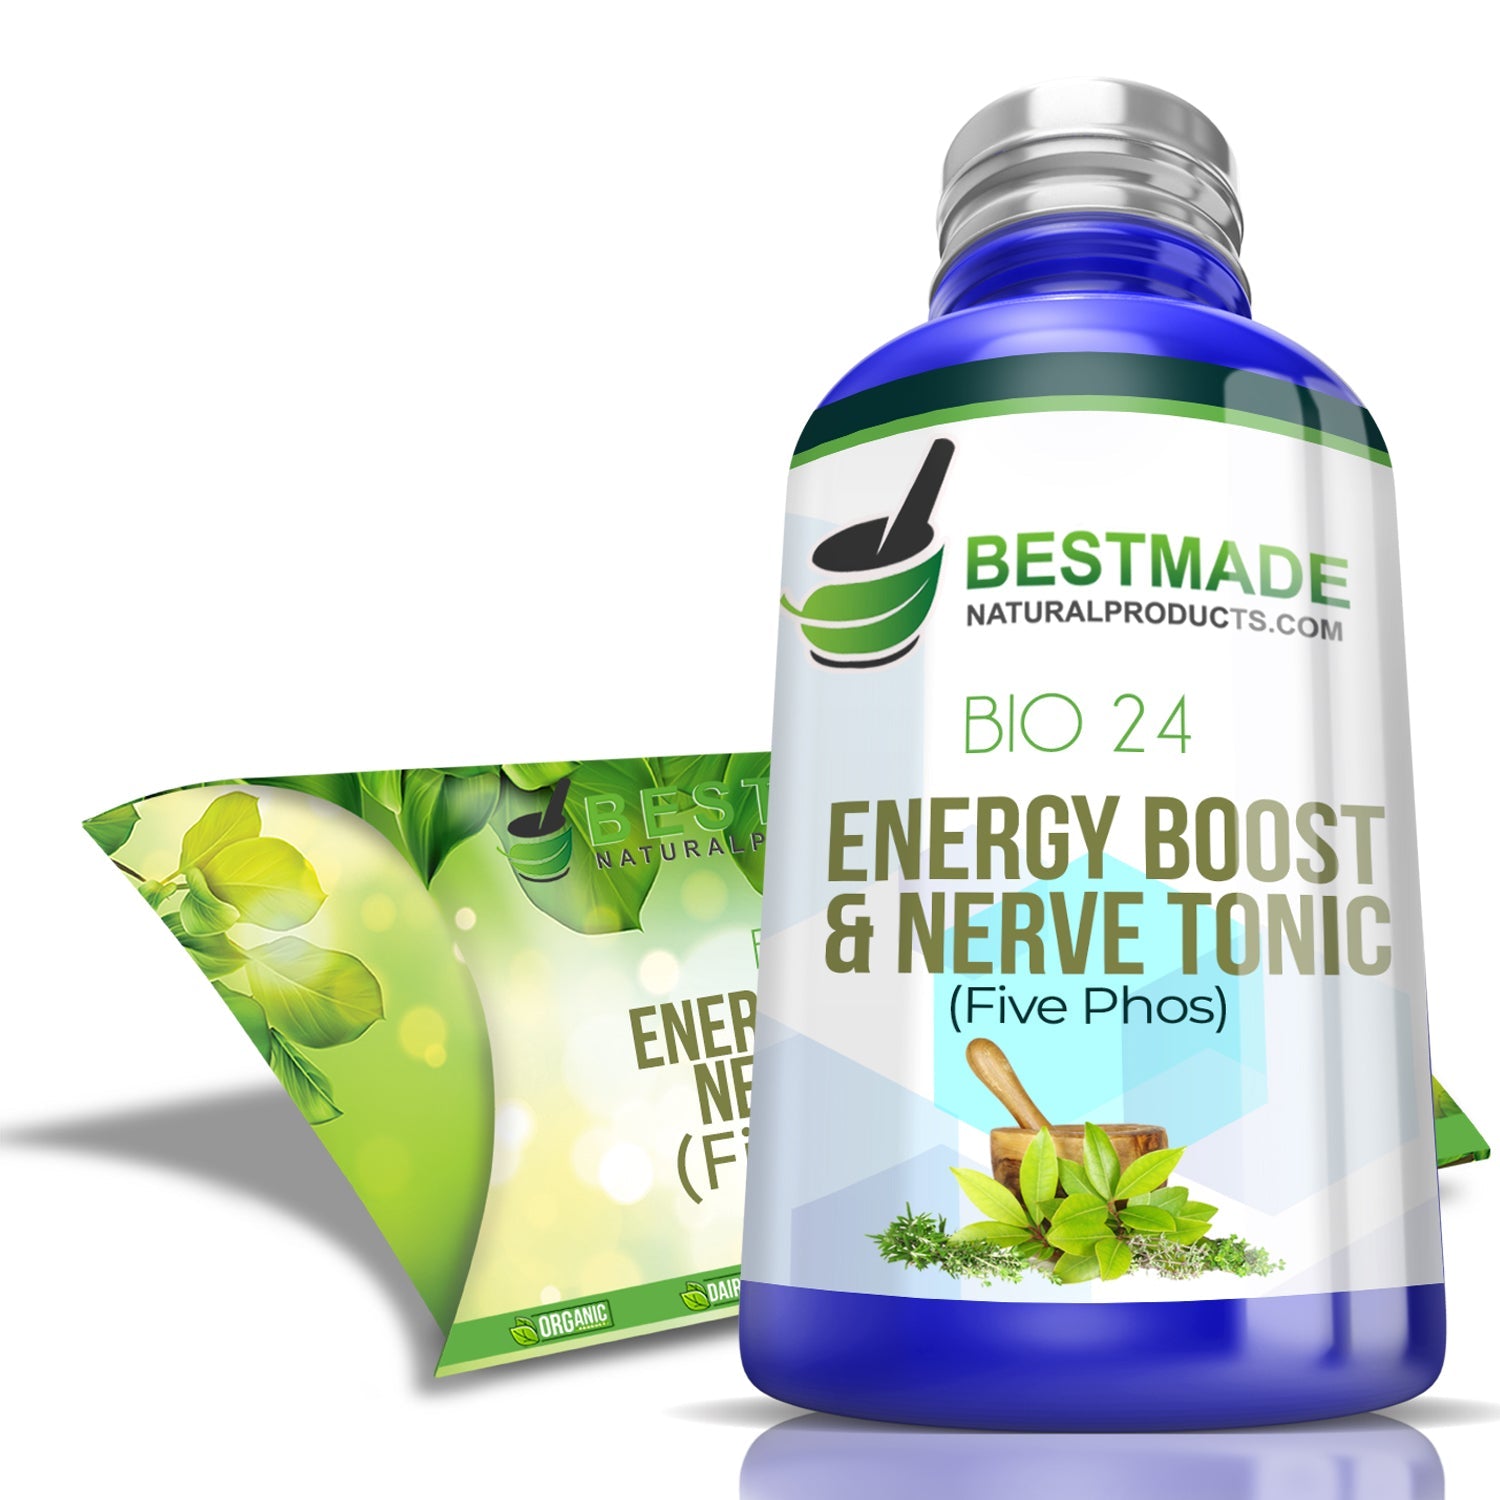 Natural energy-boosting tonics